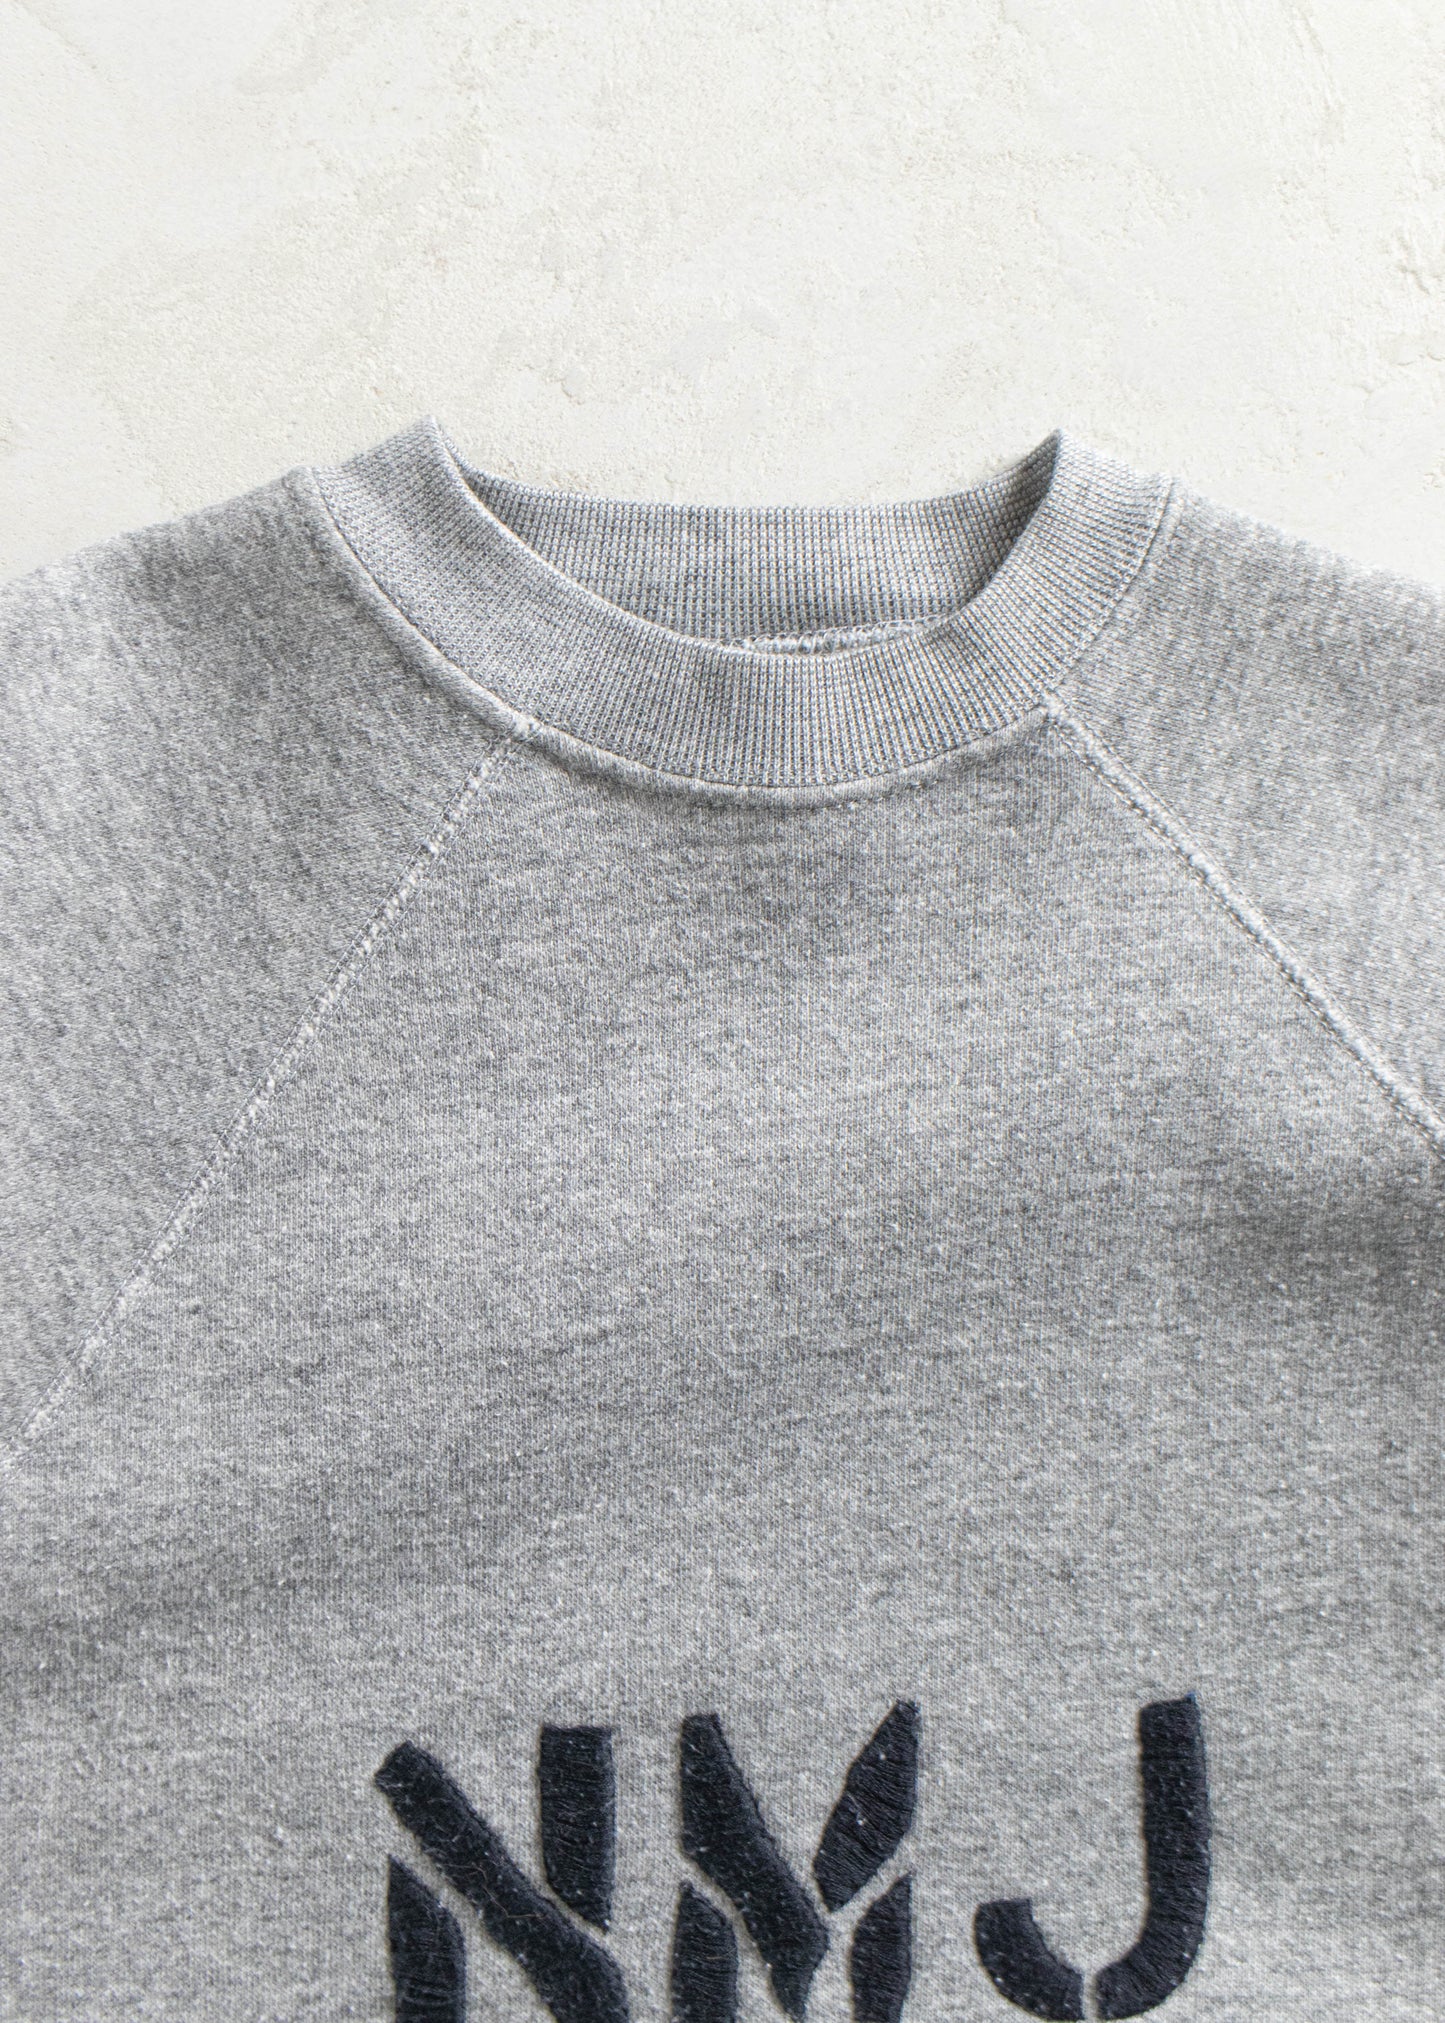 Vintage 1980s Discus Athletic MMJ Sweatshirt Size M/L